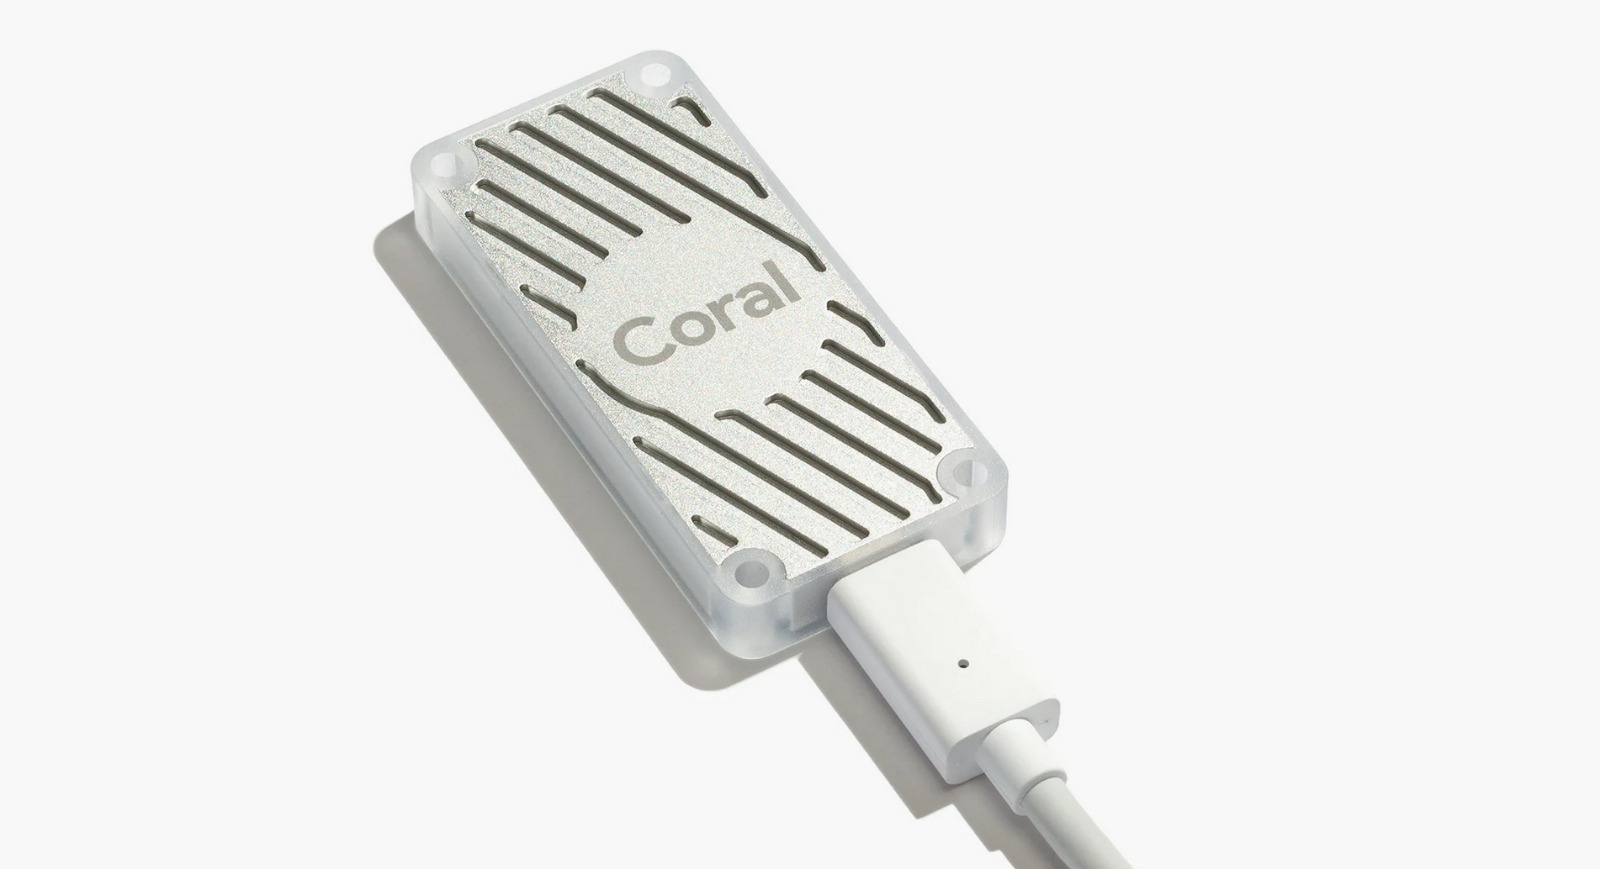 Coral USB Accelerator Google Edge TPU G950-06809-01 **USA SELLER**